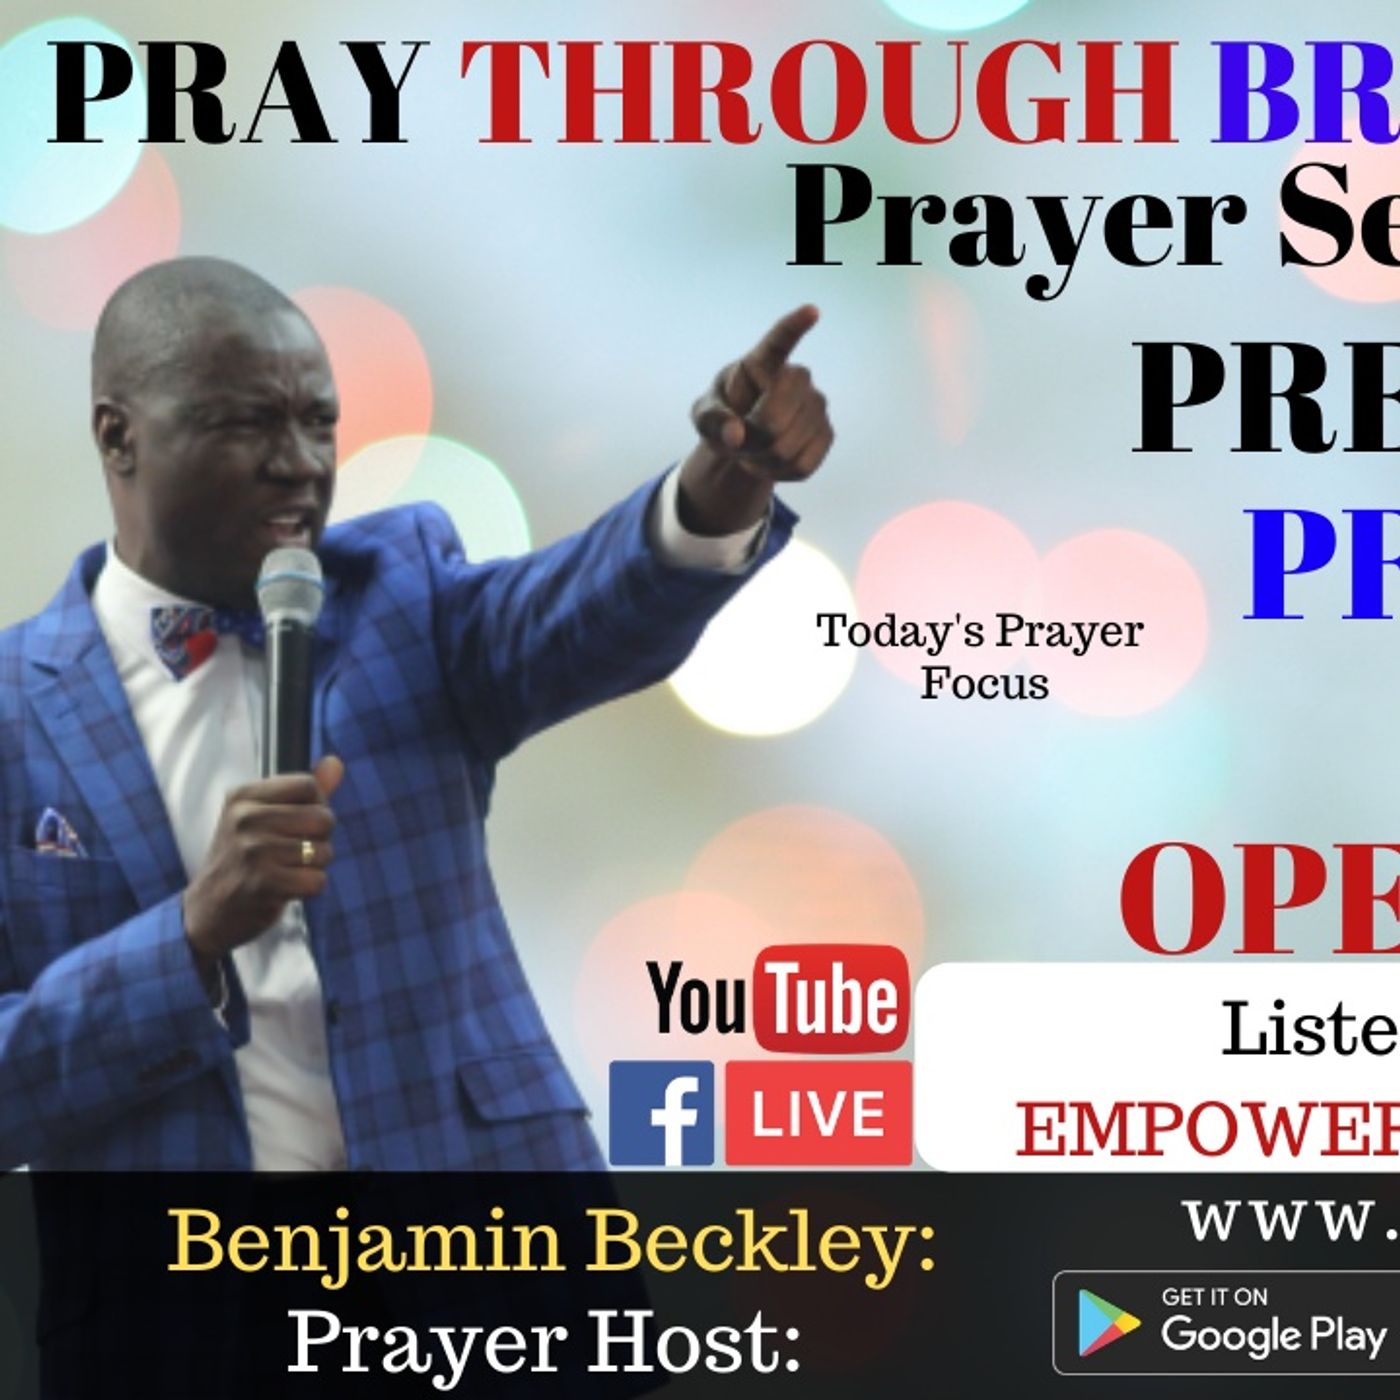 PREVAILING PRAYERS FOR OPEN DOORS